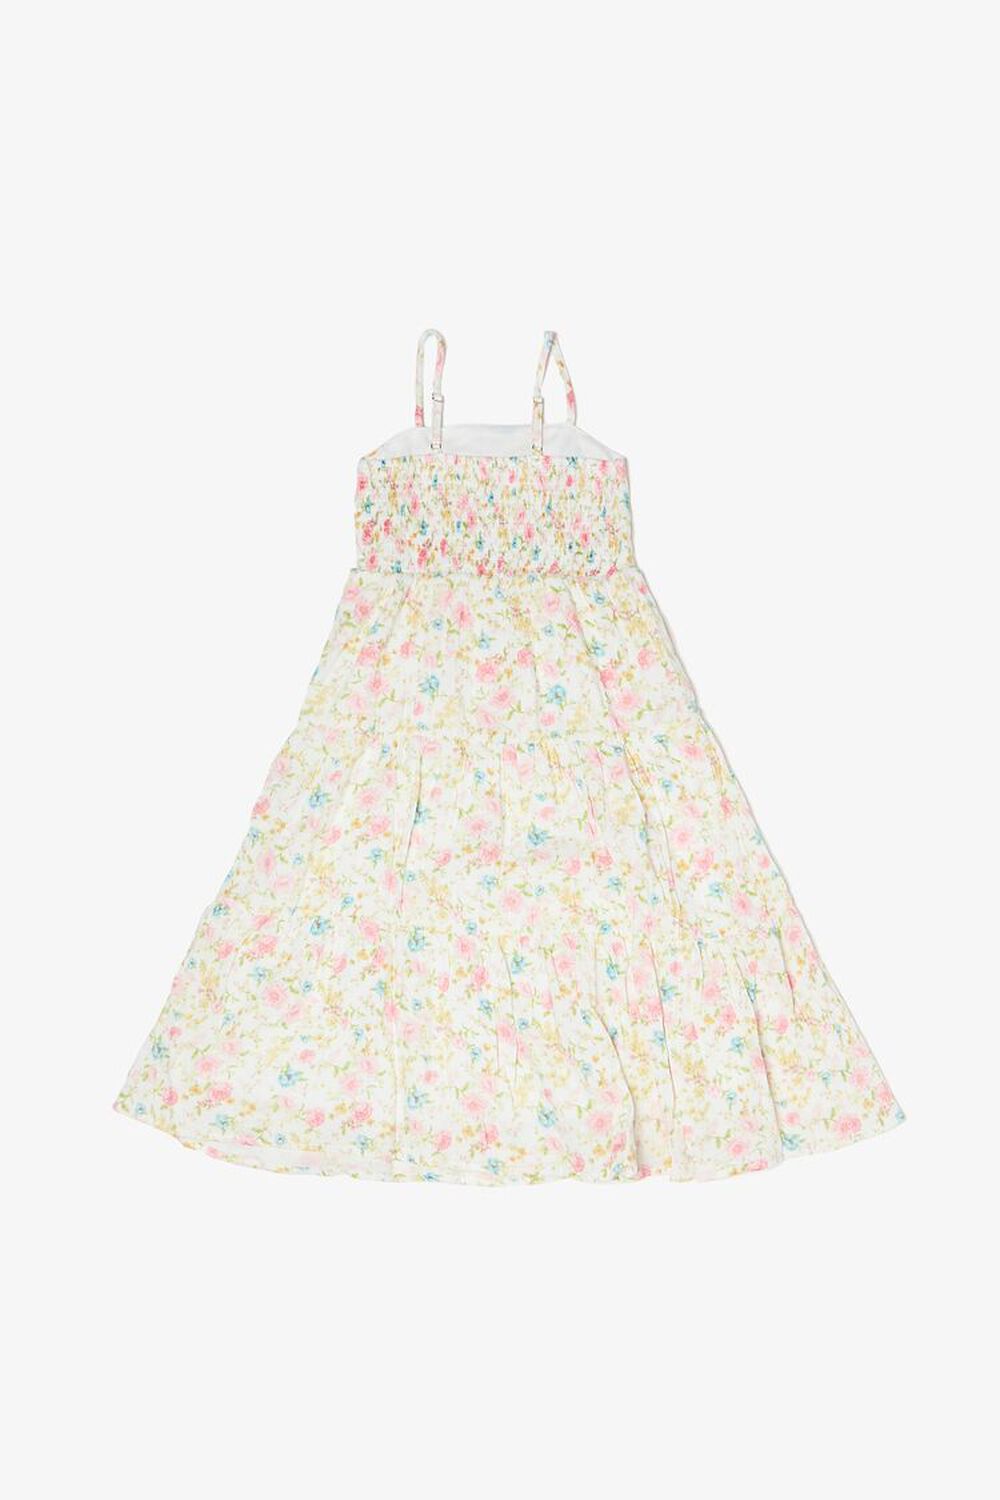 WHITE/MULTI Girls Floral Print Dress (Kids), image 2